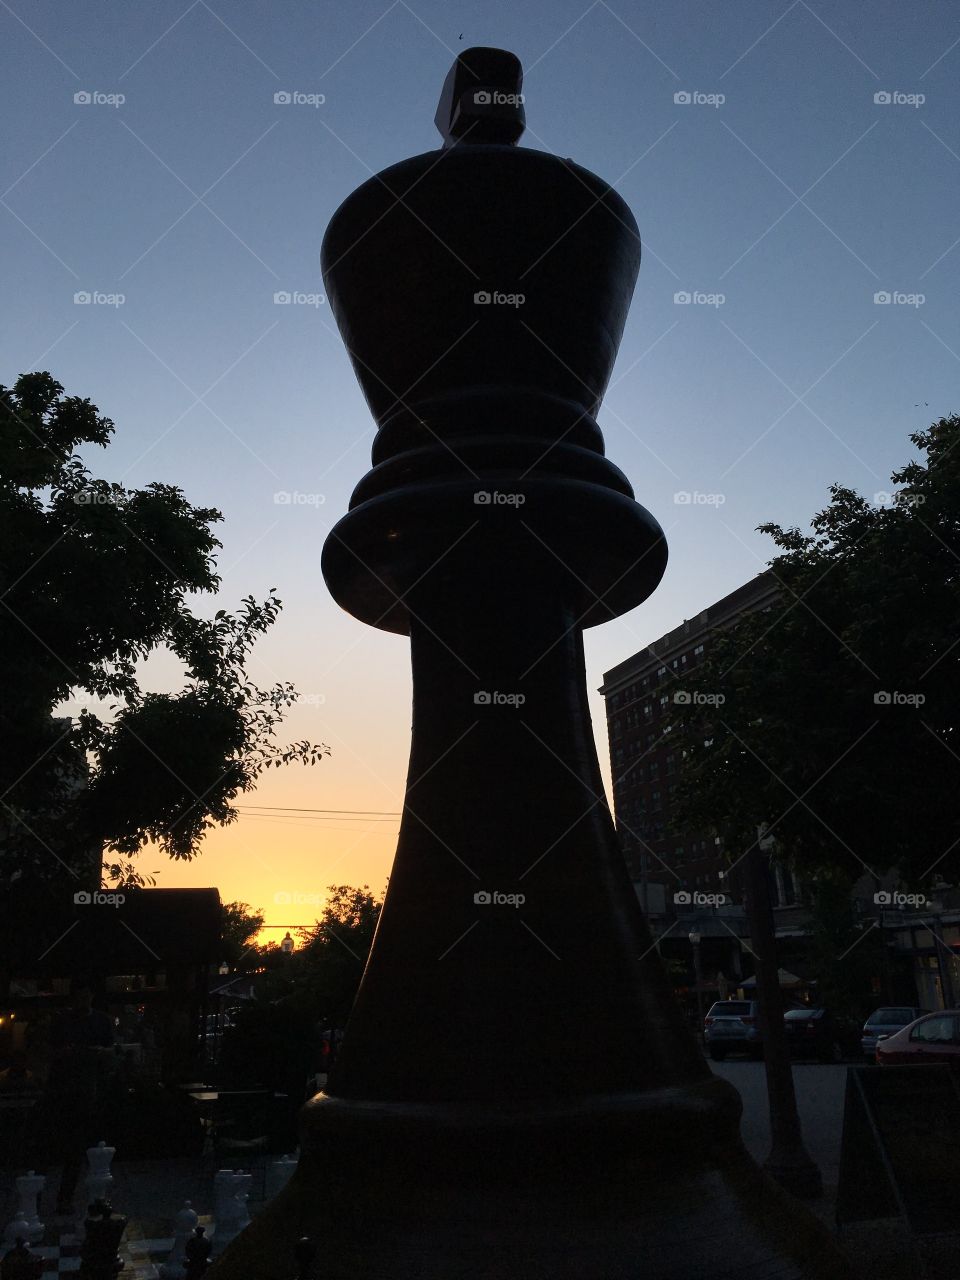 World's largest chess piece - St Louis Missouri 